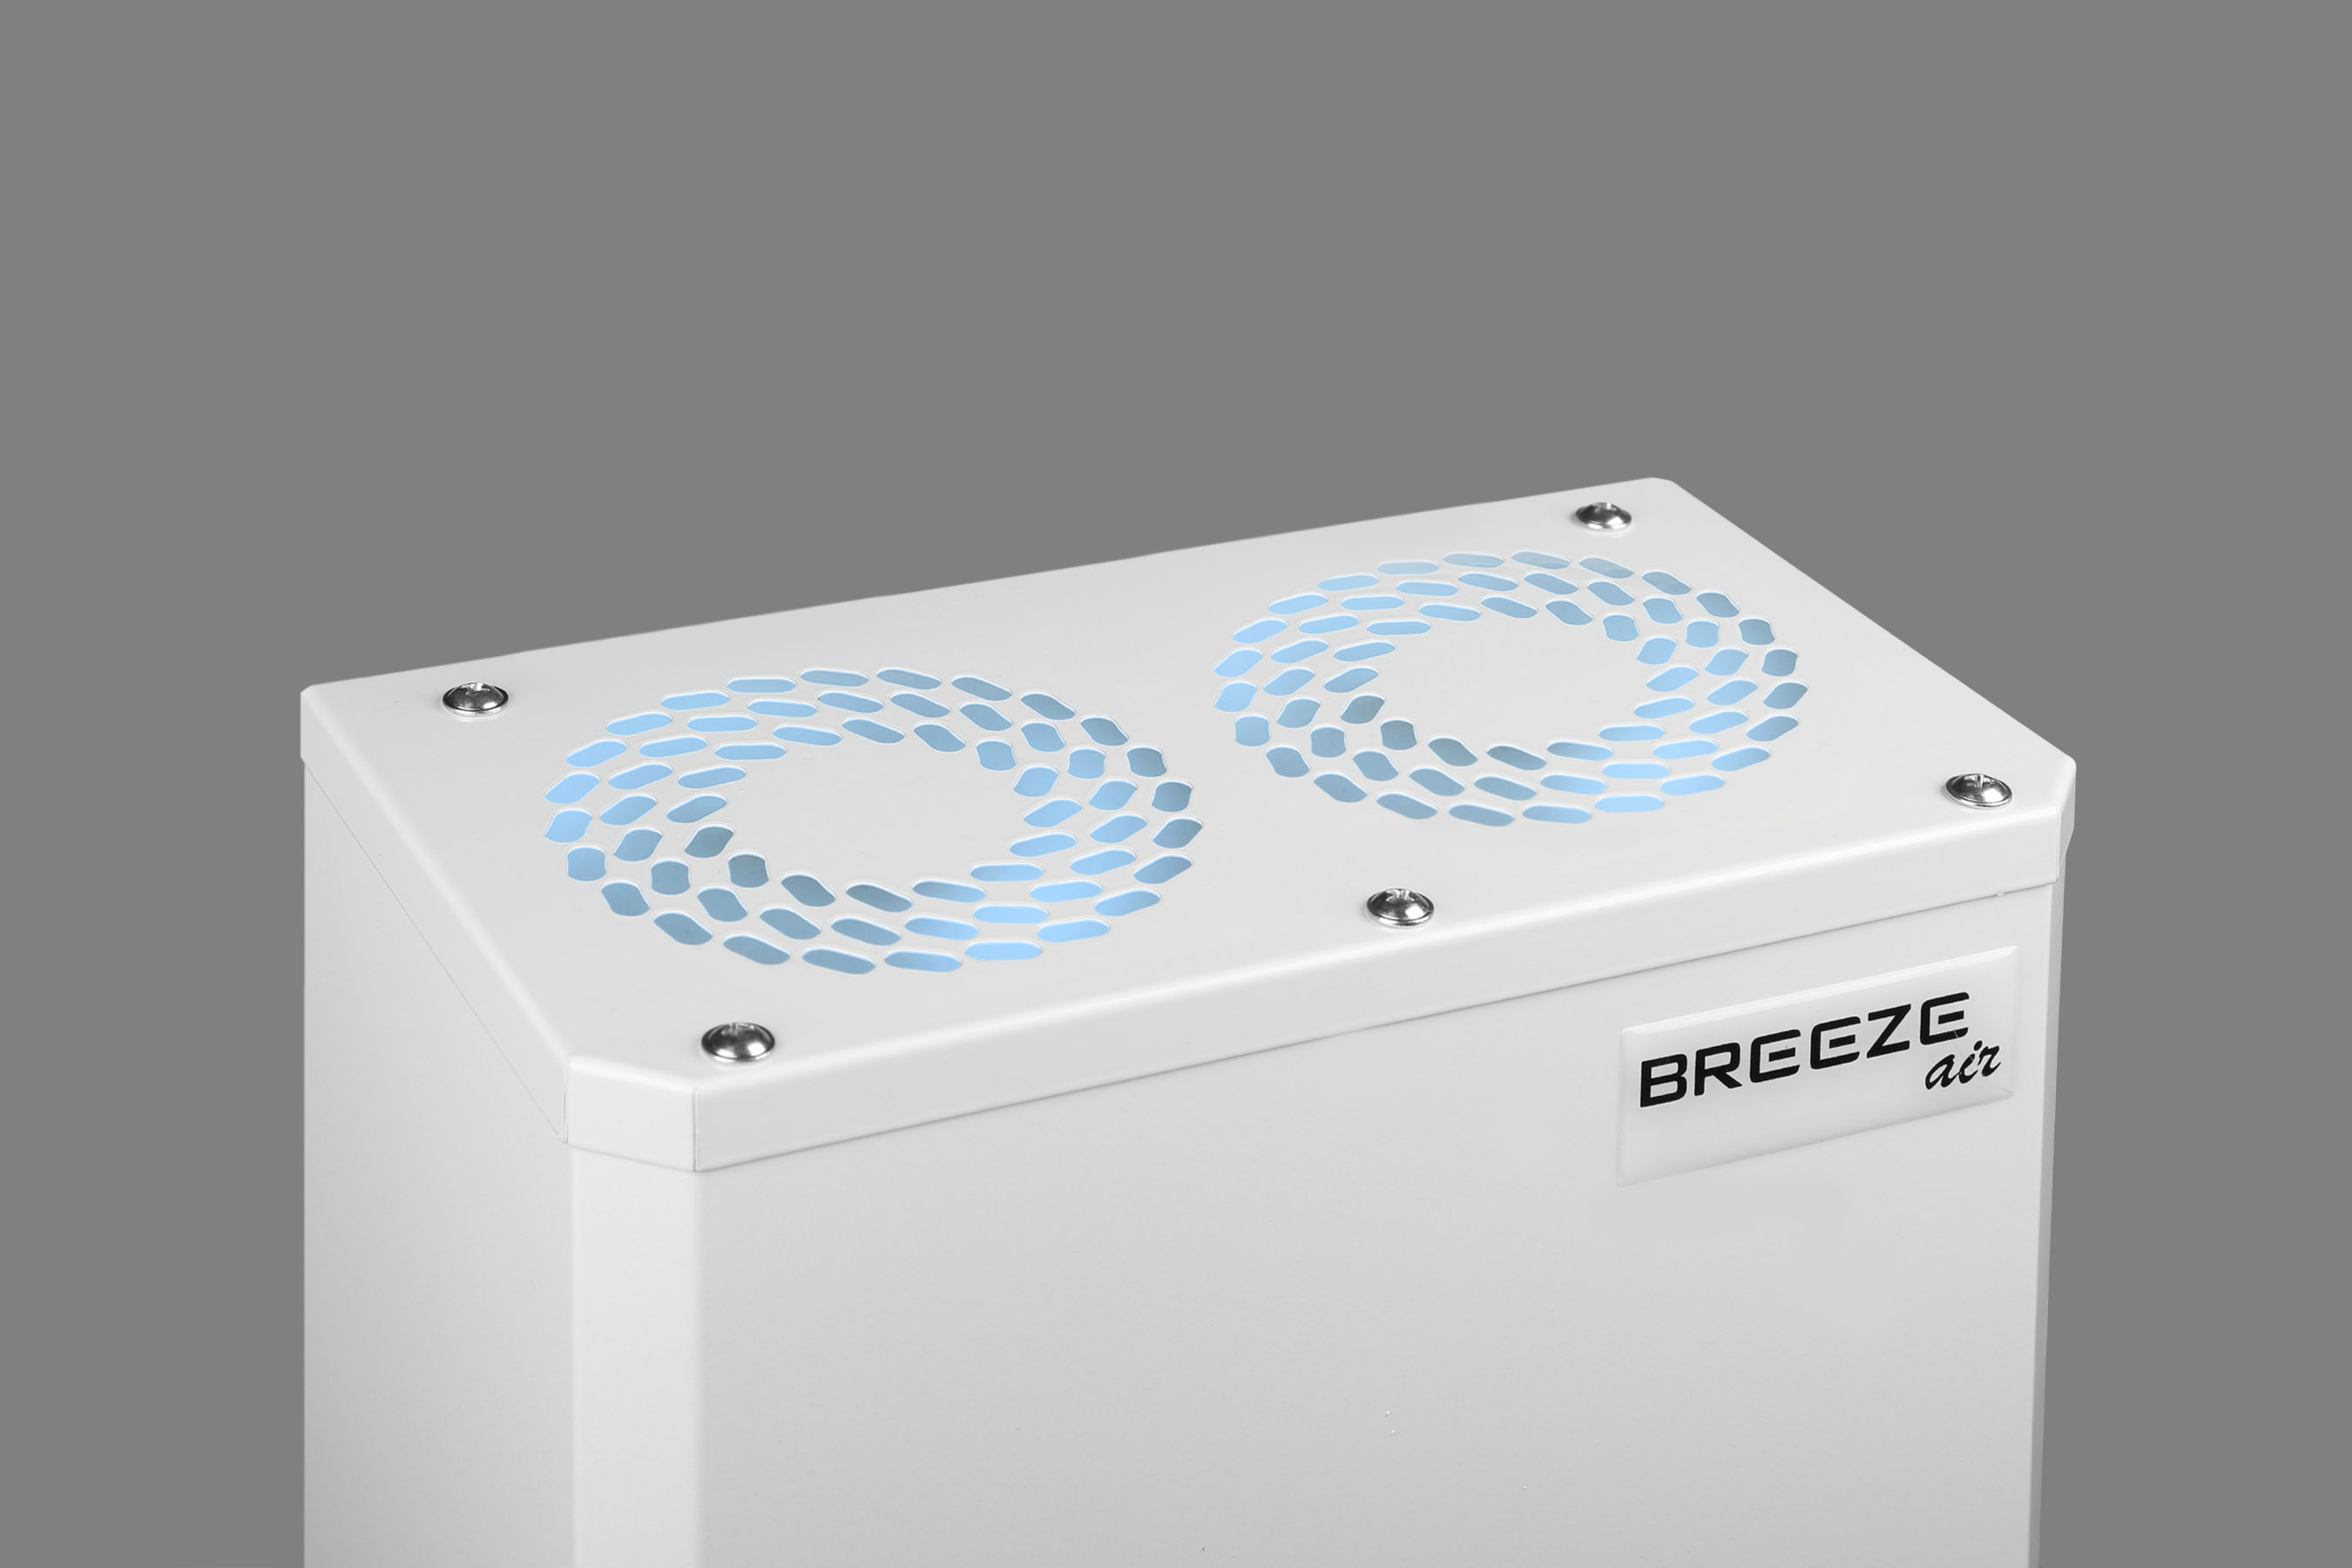 Бактерицидный рециркулятор BREEZE air ОРБ-90С